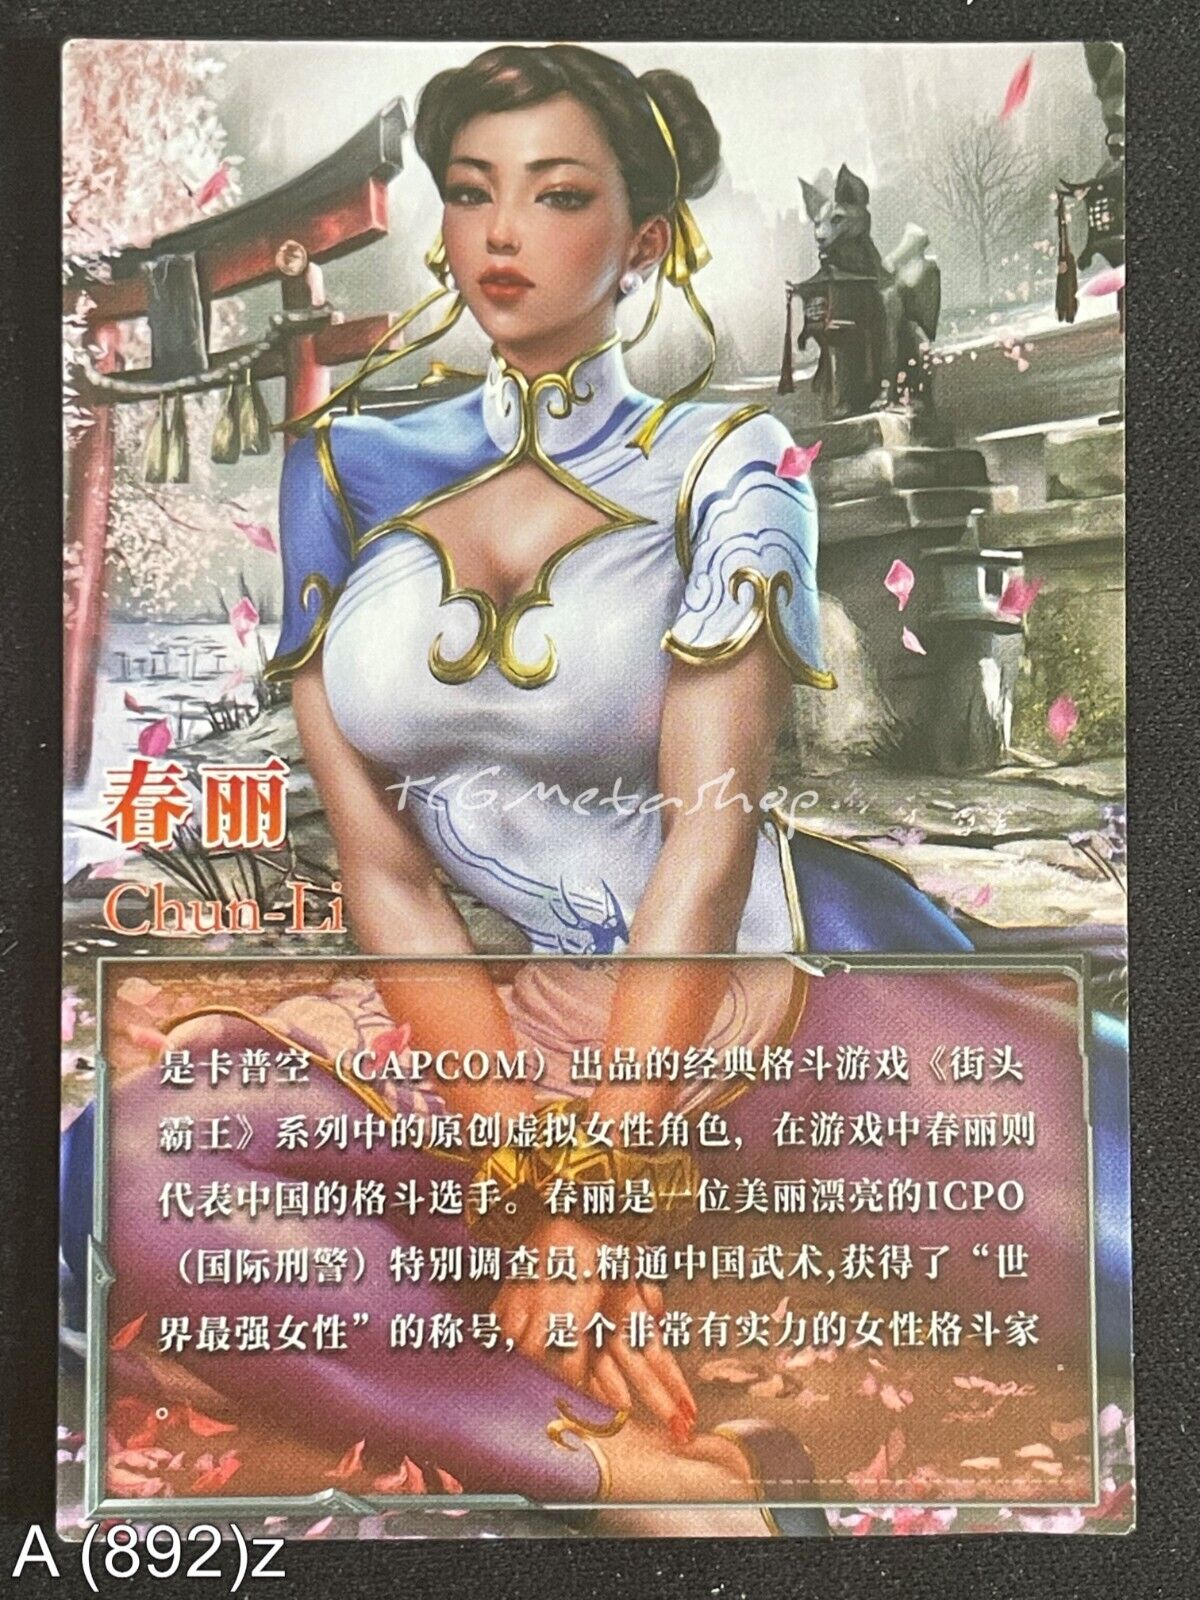 🔥 A 892 Chun-Li Street Fighter Goddess Story Anime Waifu Card ACG 🔥